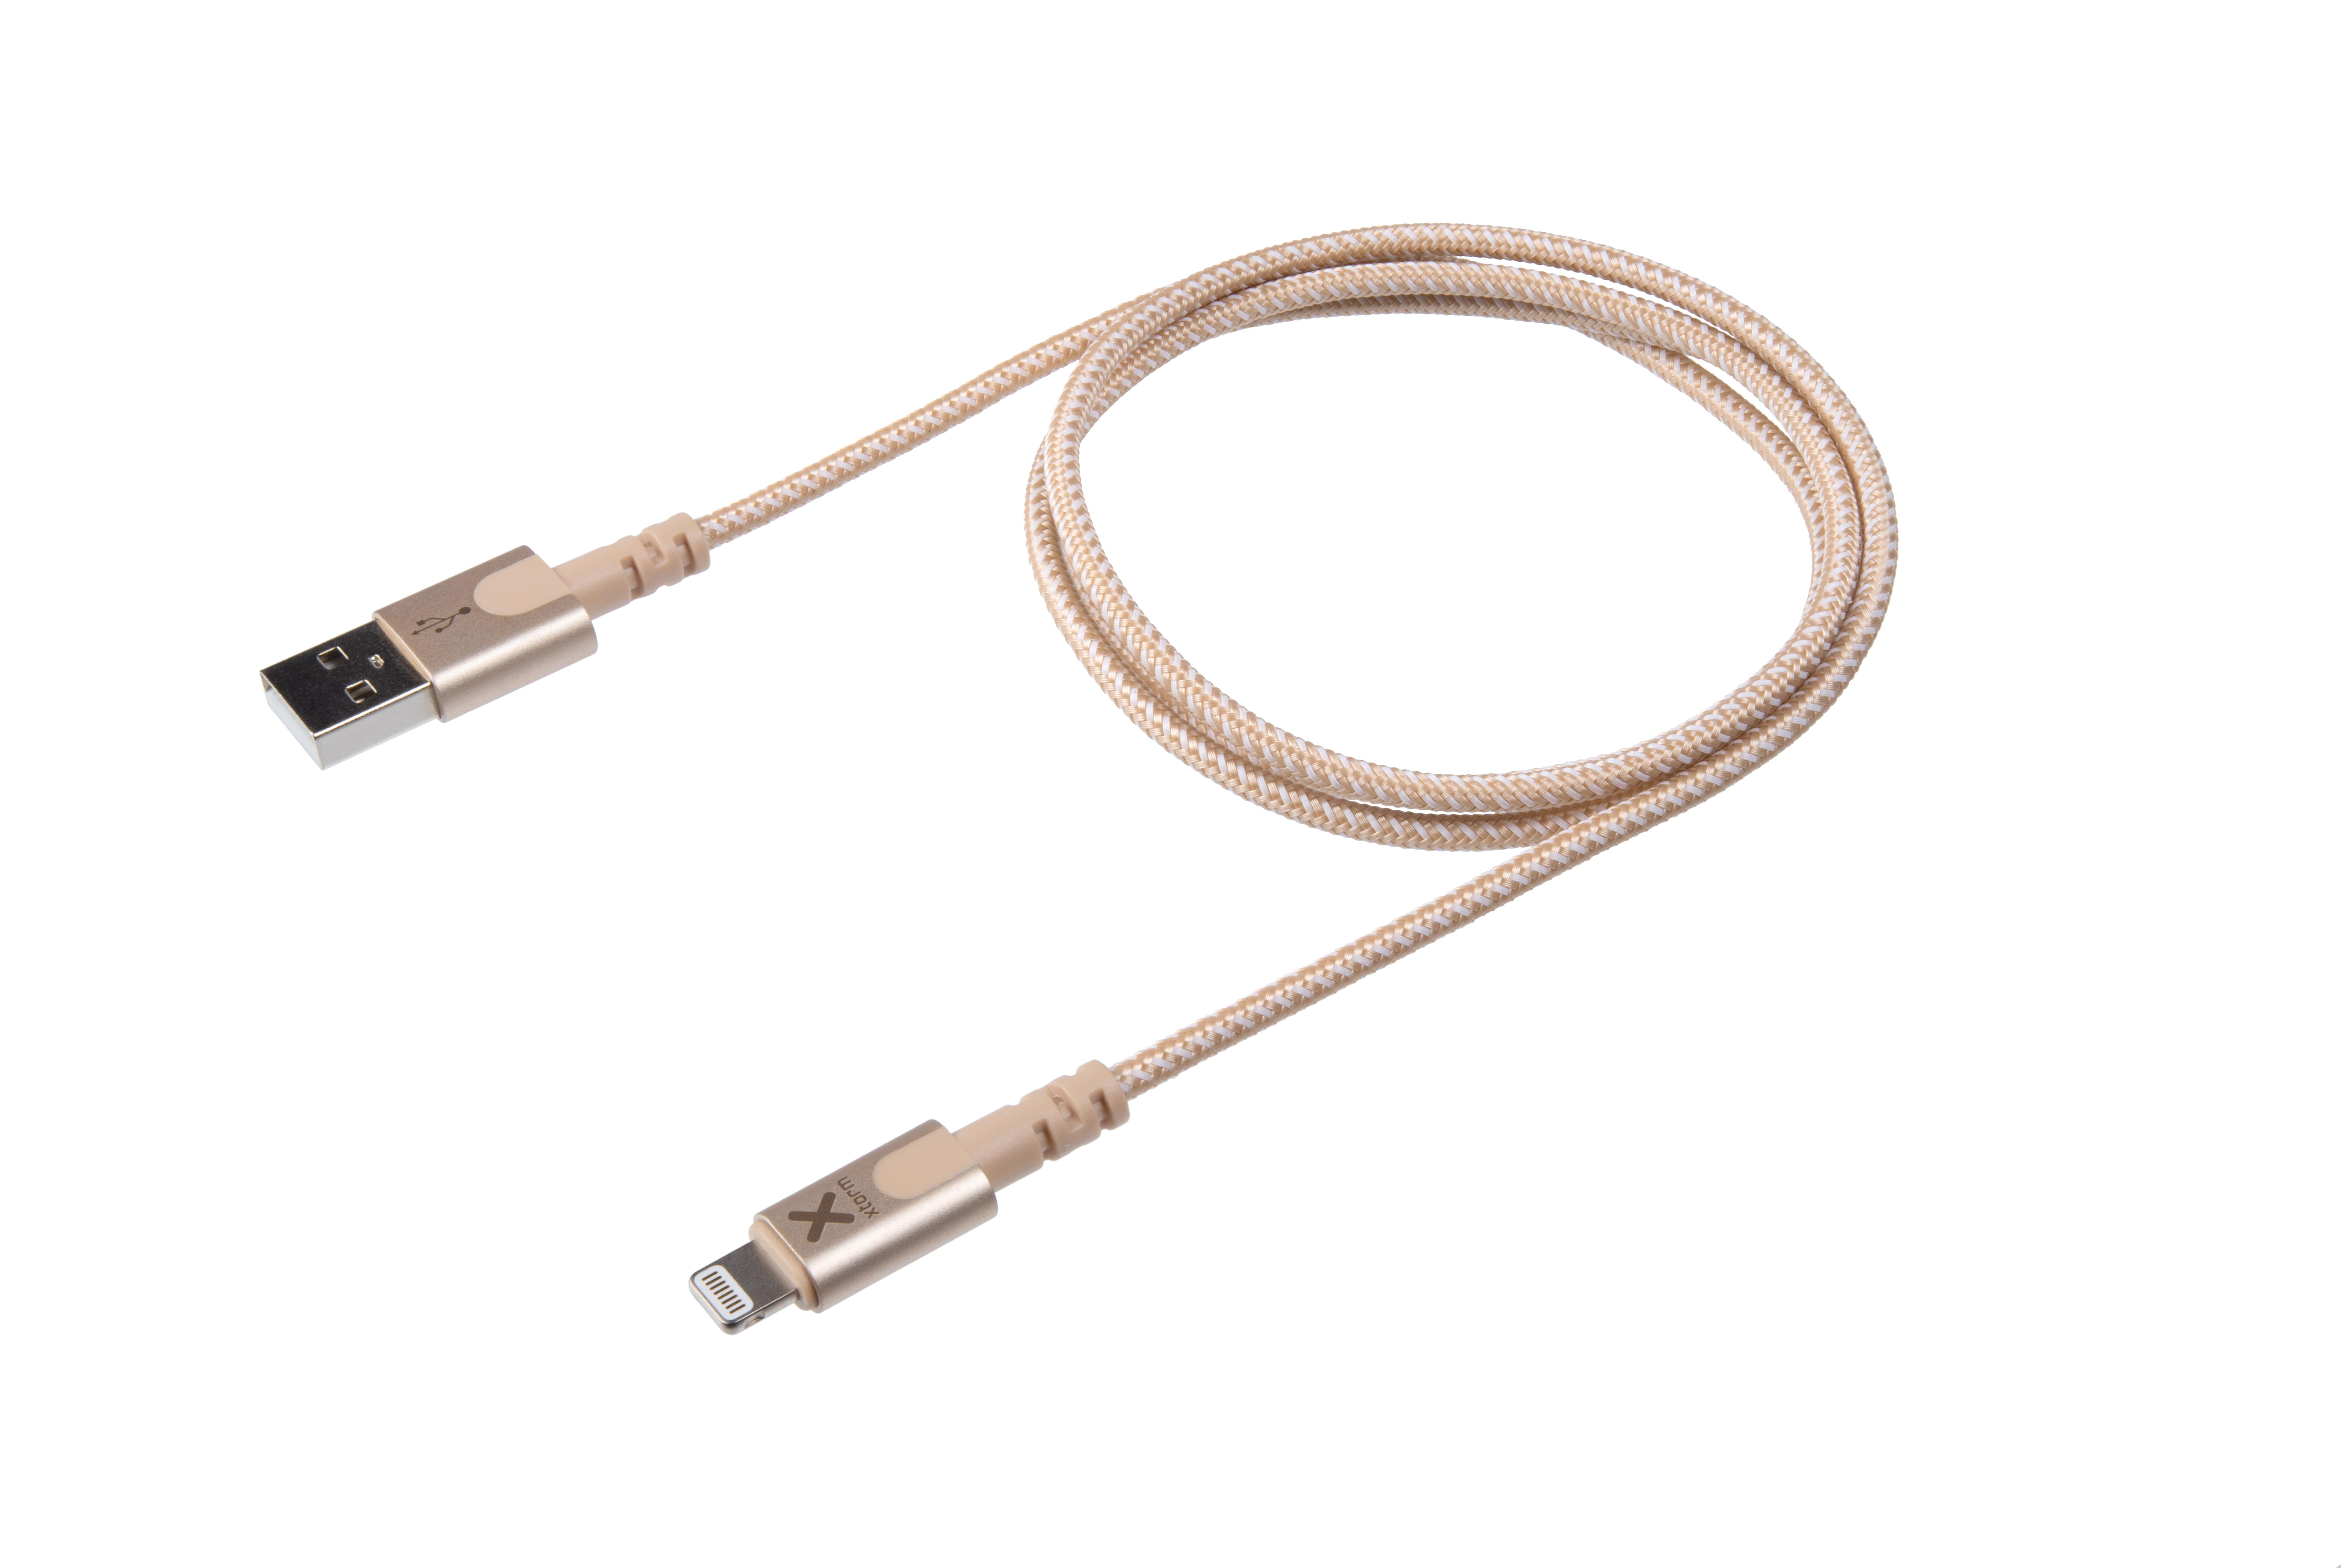 XTORM Original USB Gold (1m) Kabel USB auf Lightning Kabel